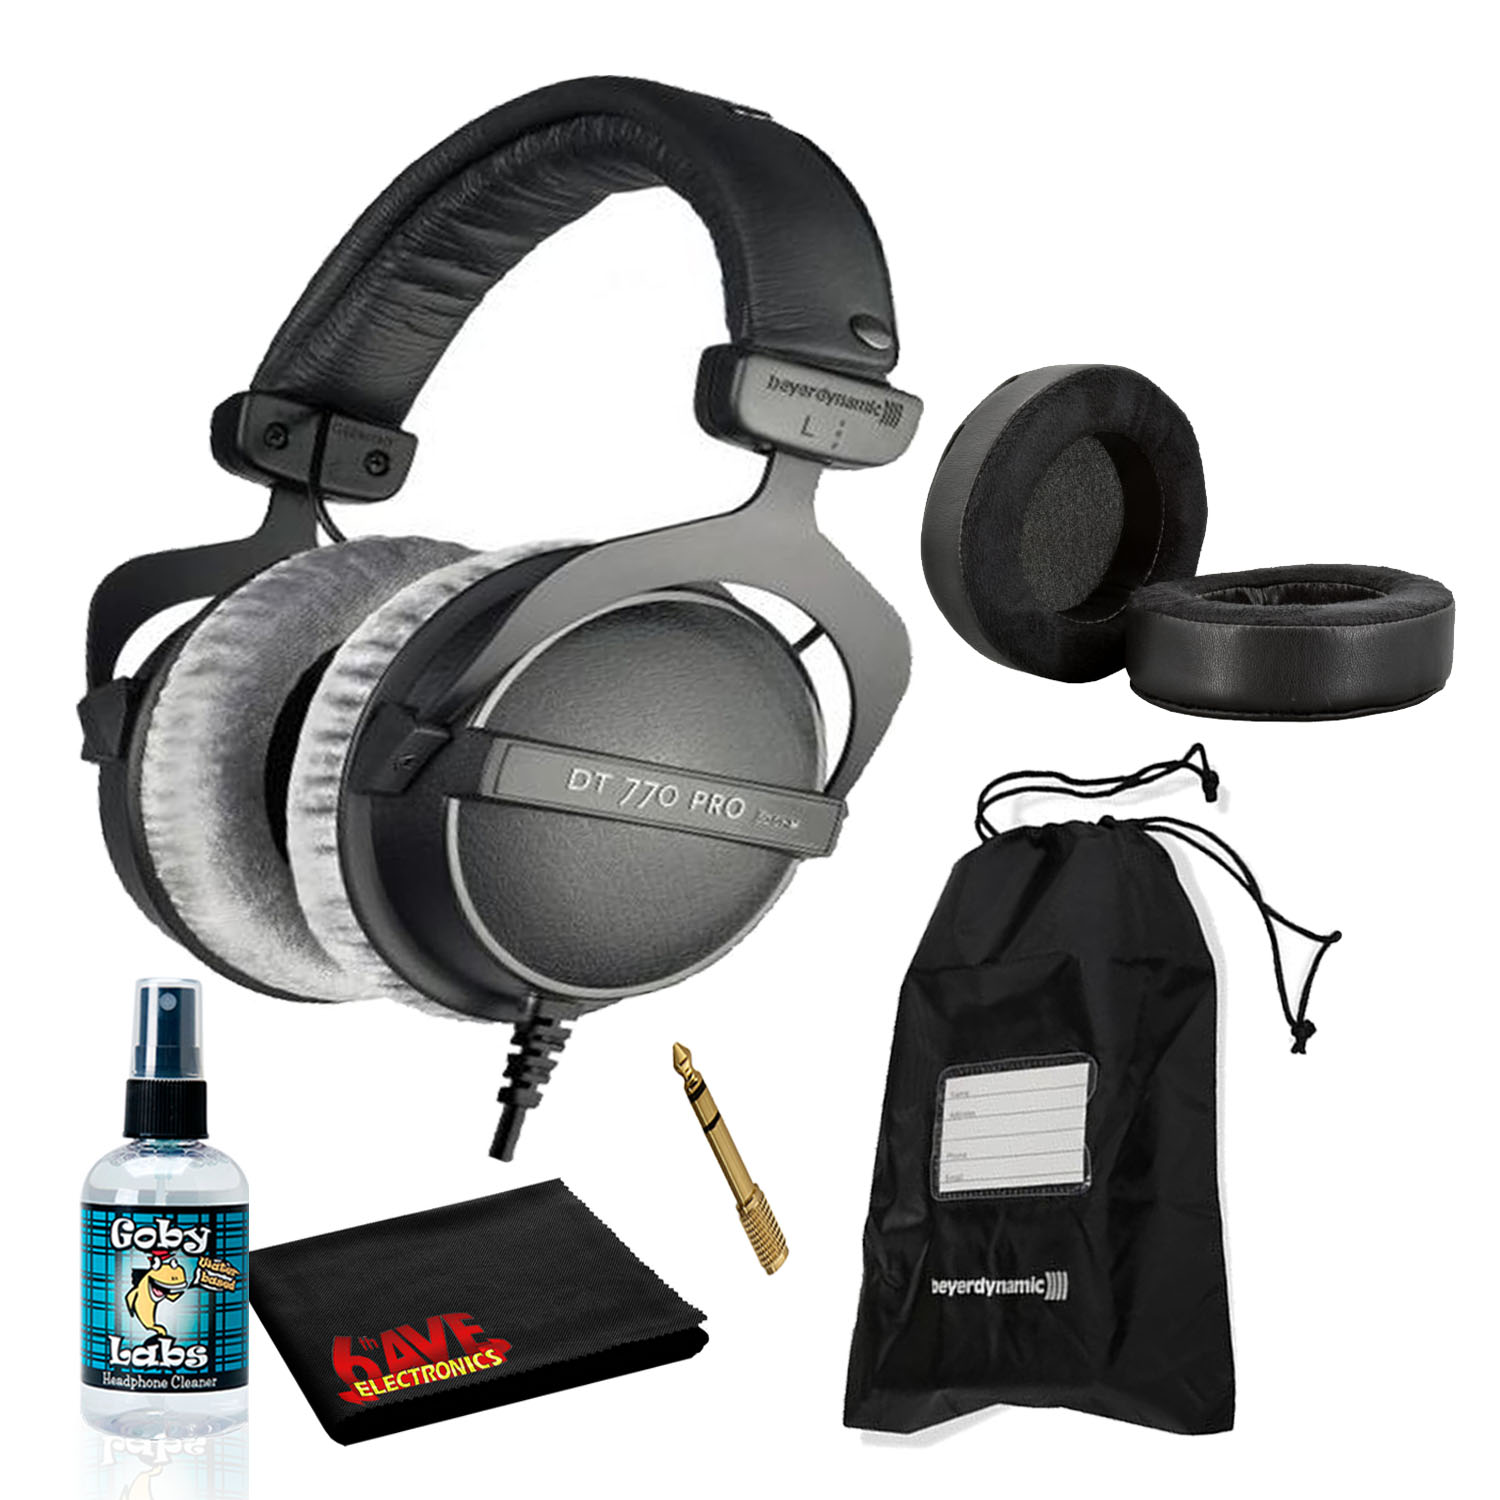 Beyerdynamic DT 770 Pro Closed-Back Studio Mixing Headphones 80